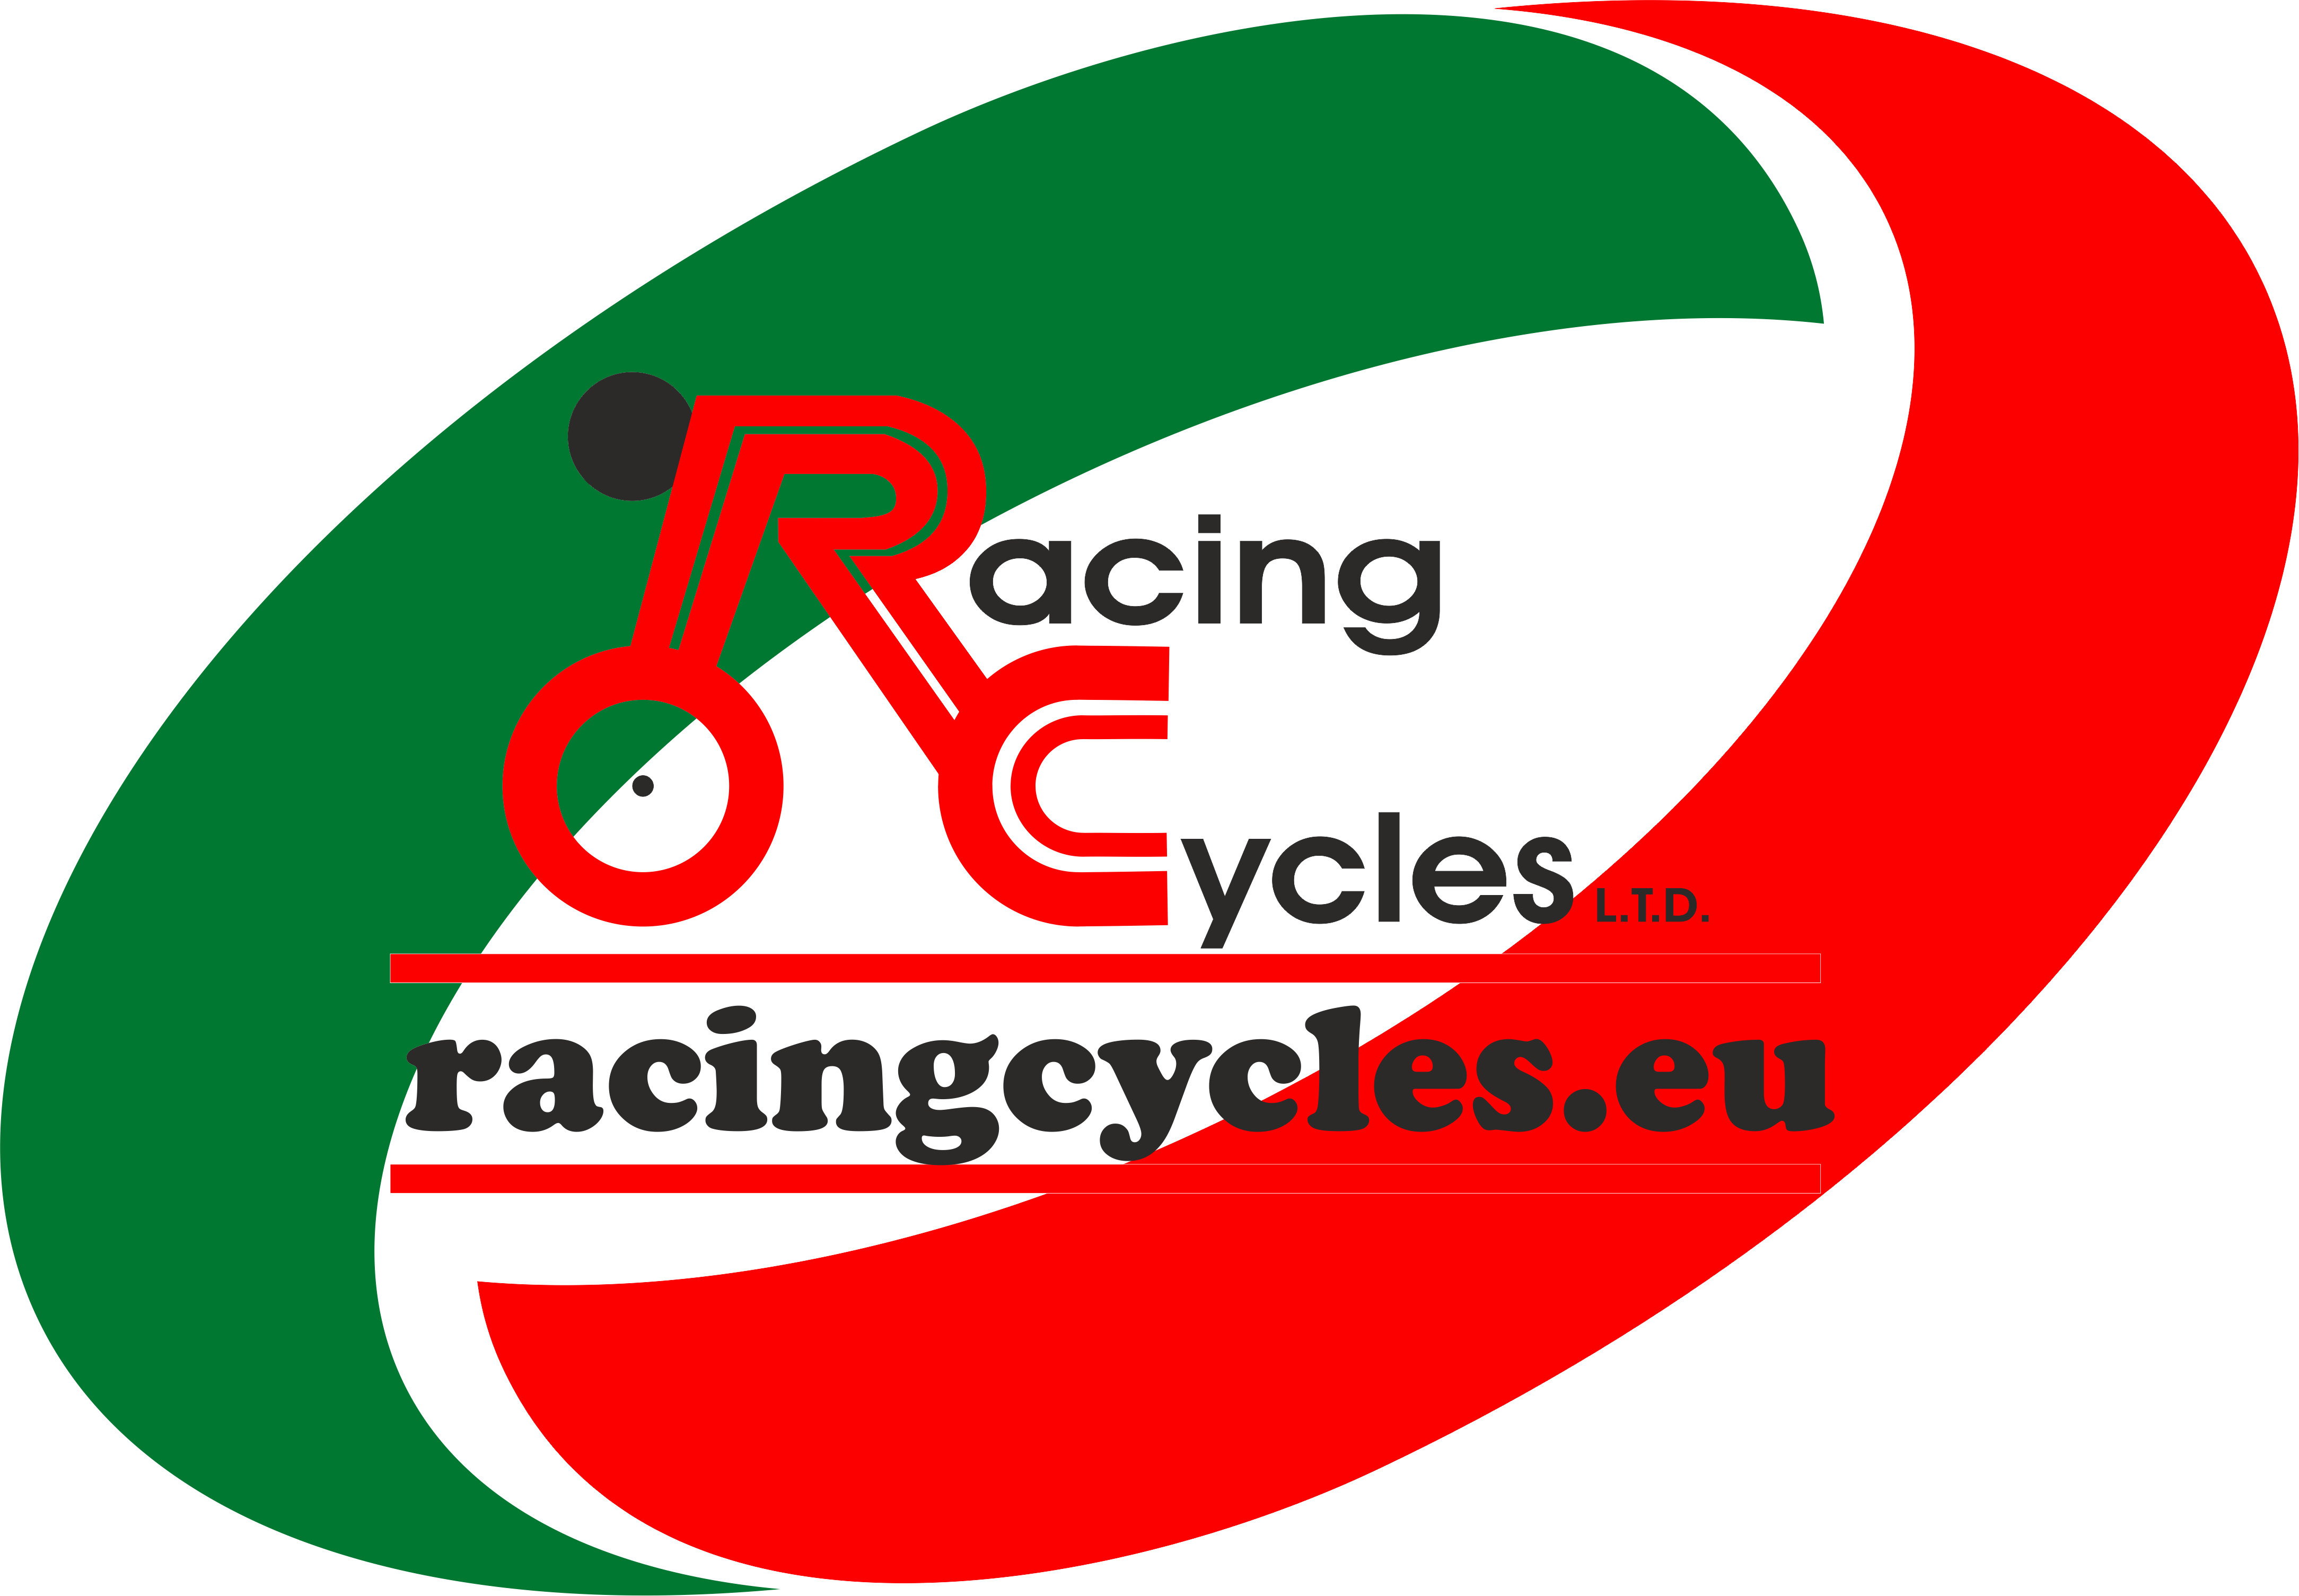 Racing Cycles